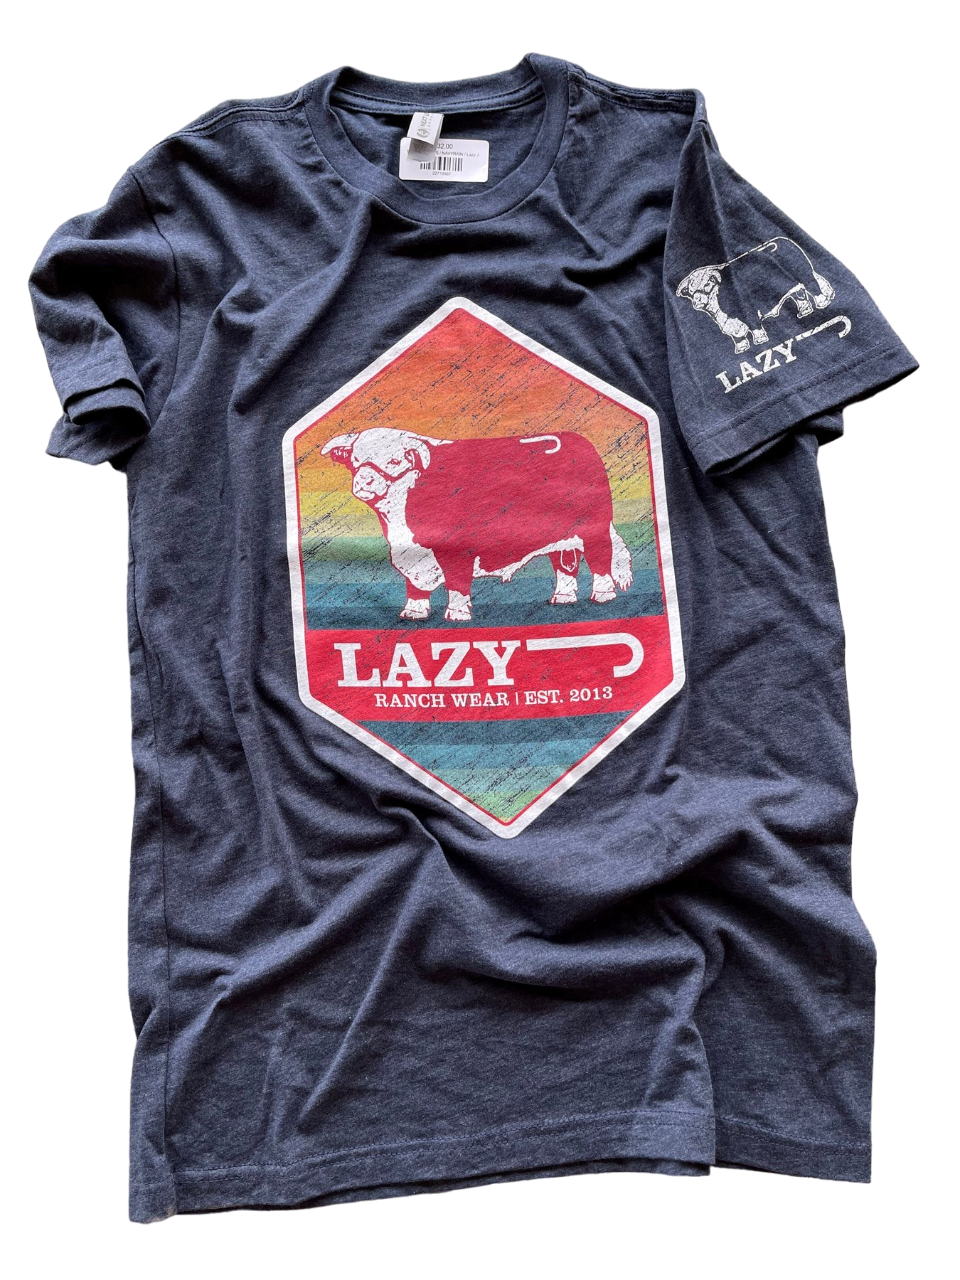 Lazy J Ranch Wear Rain Hereford T-Shirt